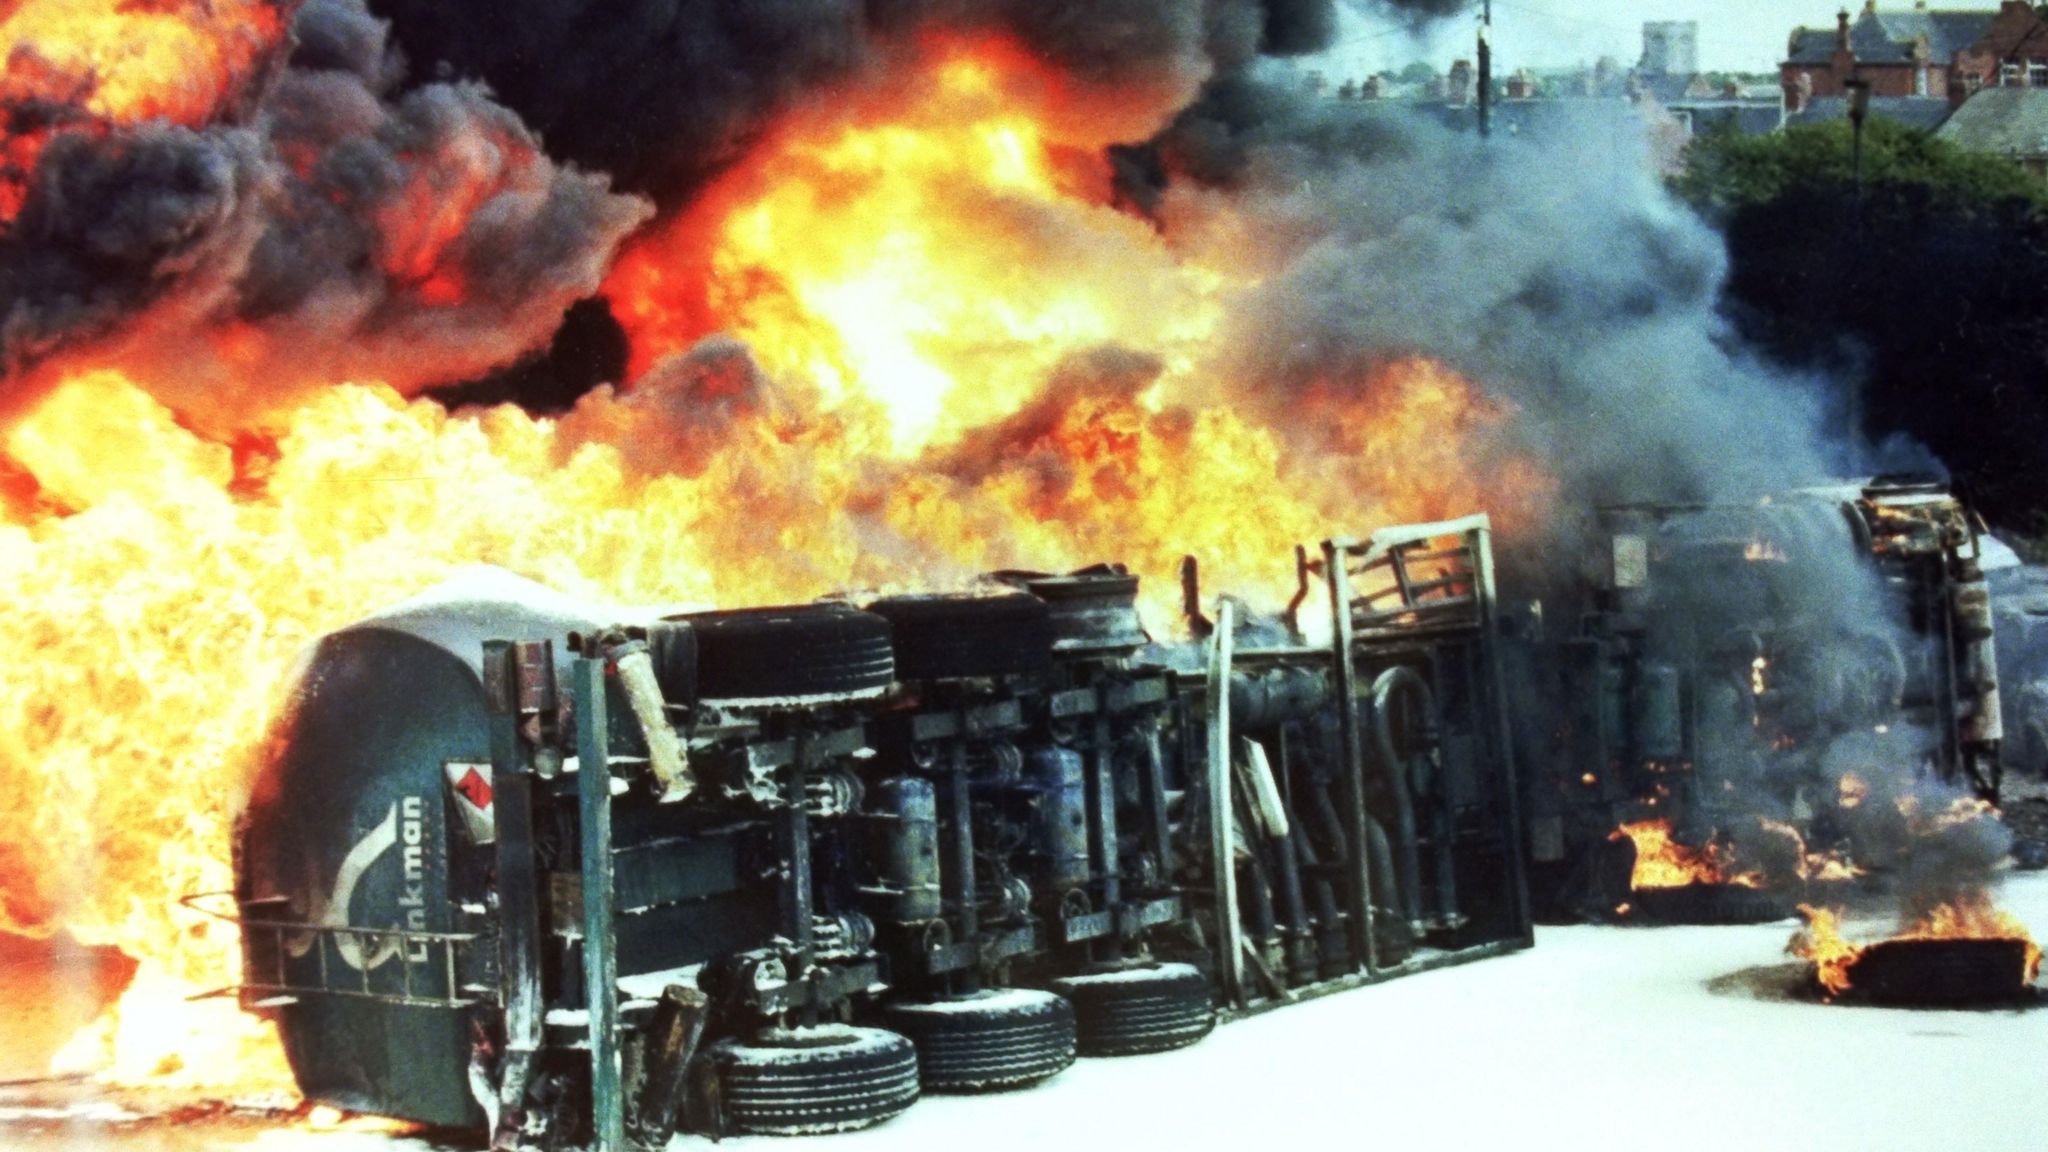 A tanker fire in Sunderland in 1992